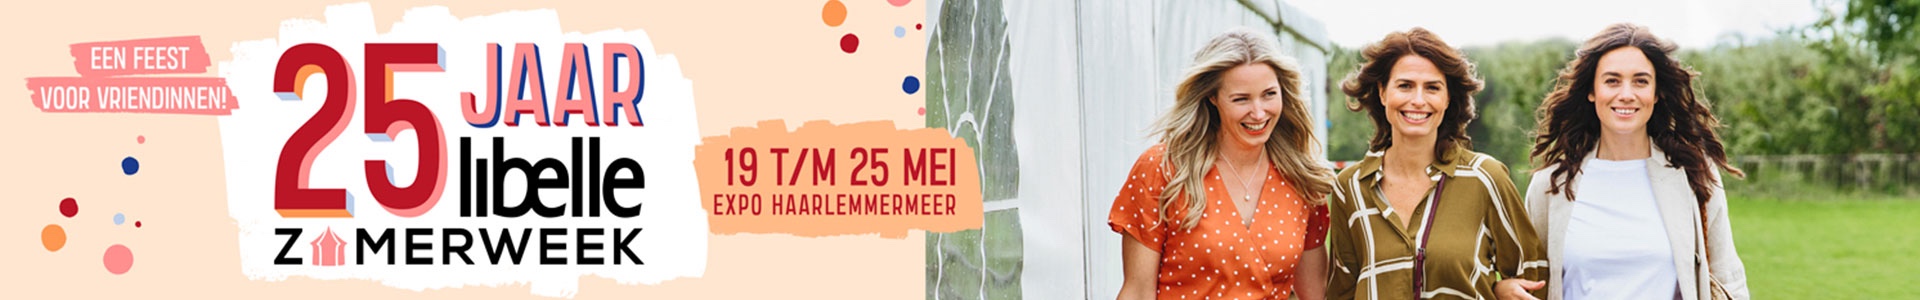 Libelle Zomerweek banner